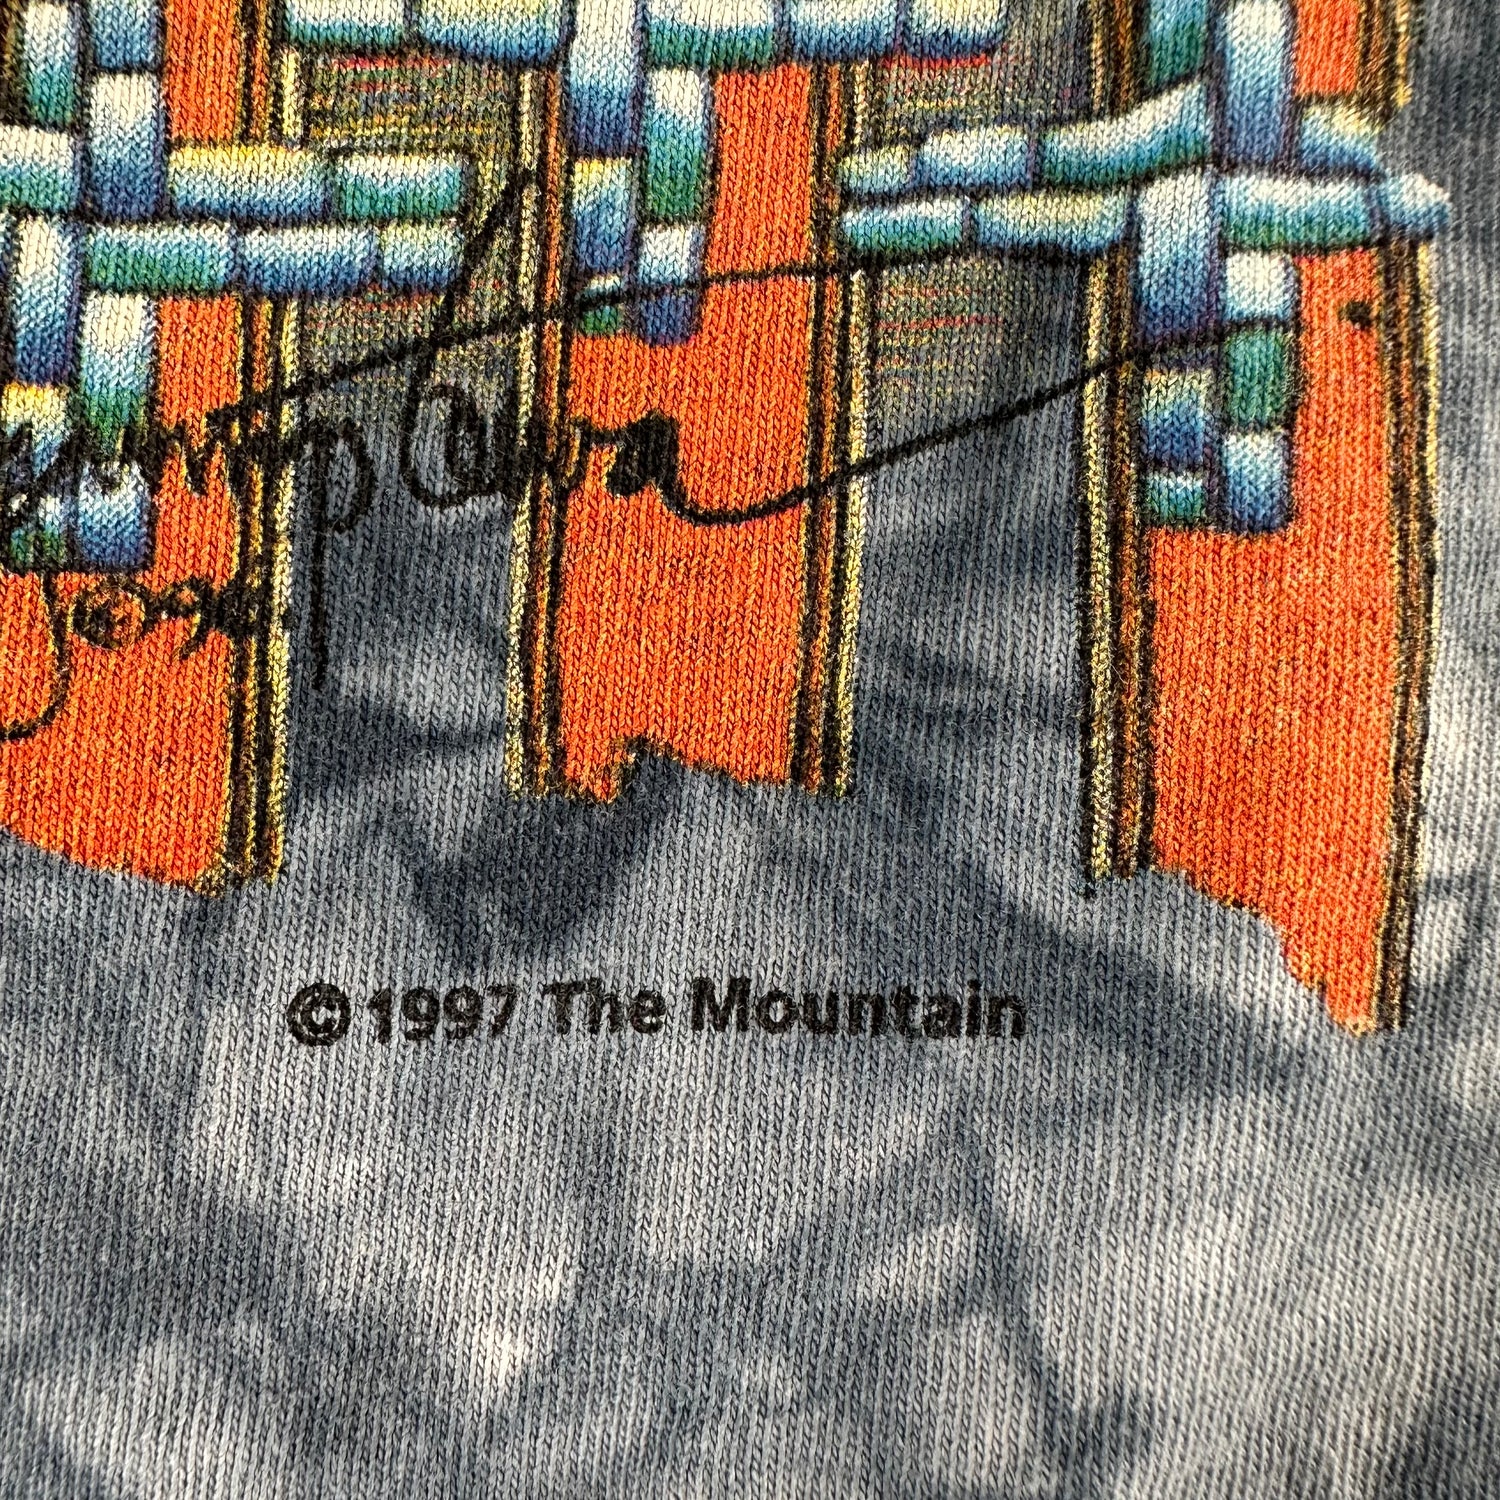 Vintage 1997 The Mountain T-shirt size XL